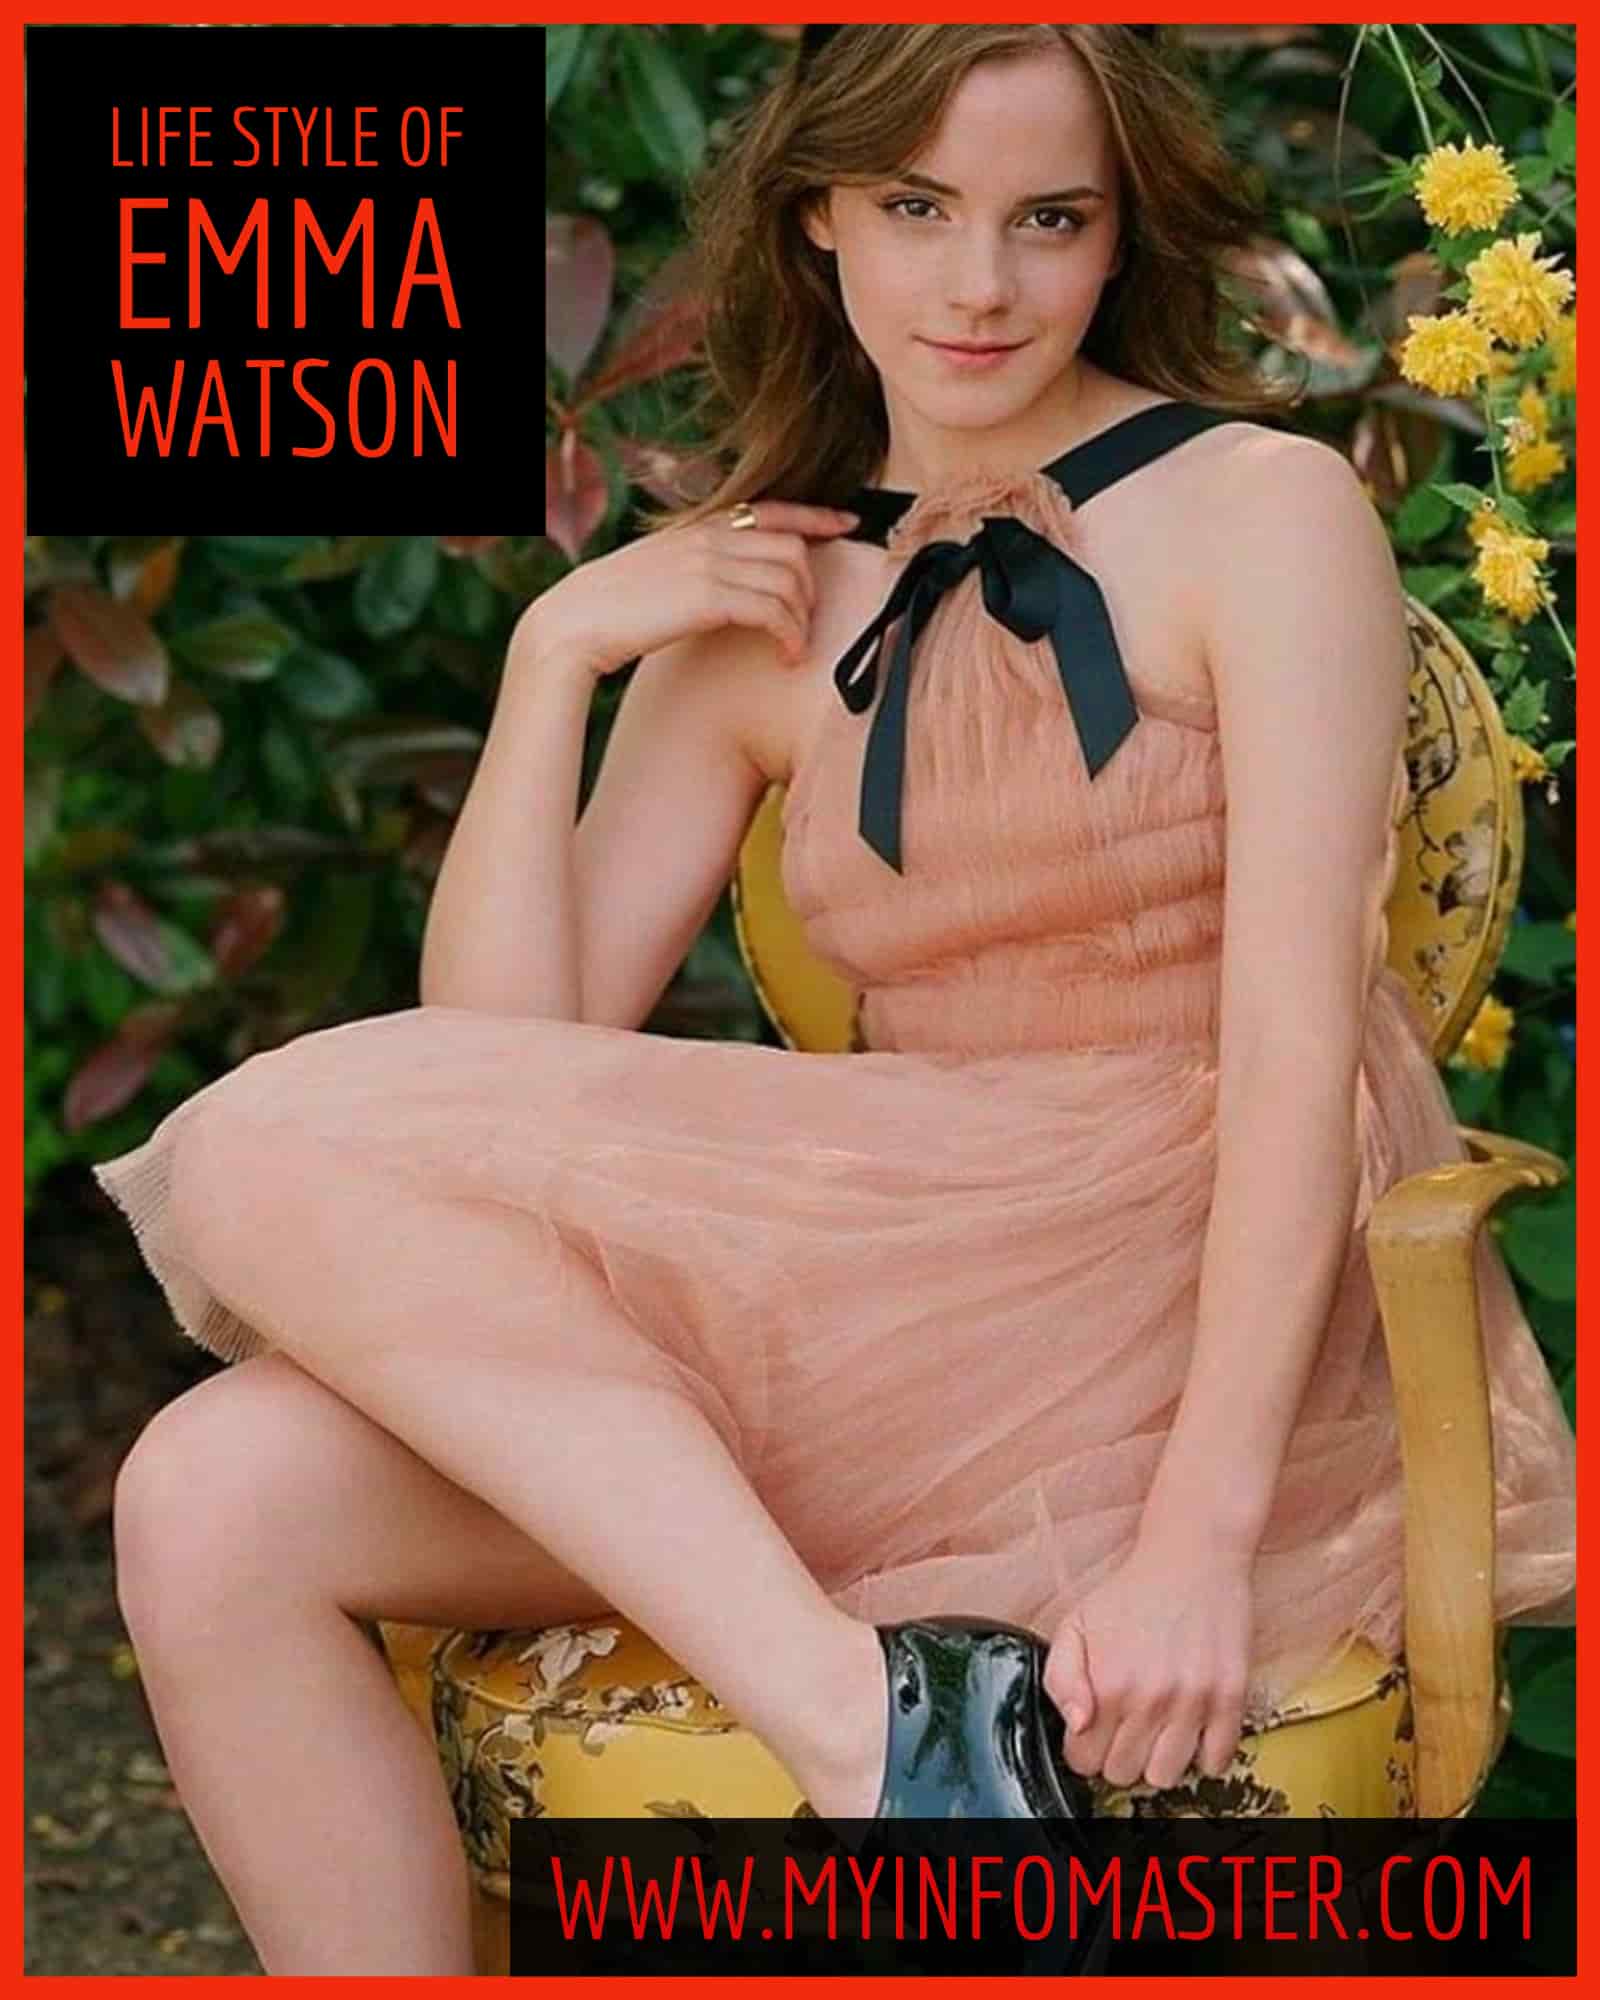 #Emma Watson #Emma Watson age #Emma Watson biography #Emma Watson husband #Emma Watson hair #daniel radcliffe and emma Watson #emma watson Hermione #emma watson lucy Watson #kiernan shipka and emma Watson #watson emma #emma watson young #emma watson news #emma watson brendan Wallace #matthew janney #emma watson fake #emma watson colonia #will adamowicz #emma harry potter #rupert grint emma Watson #emma watson relationship